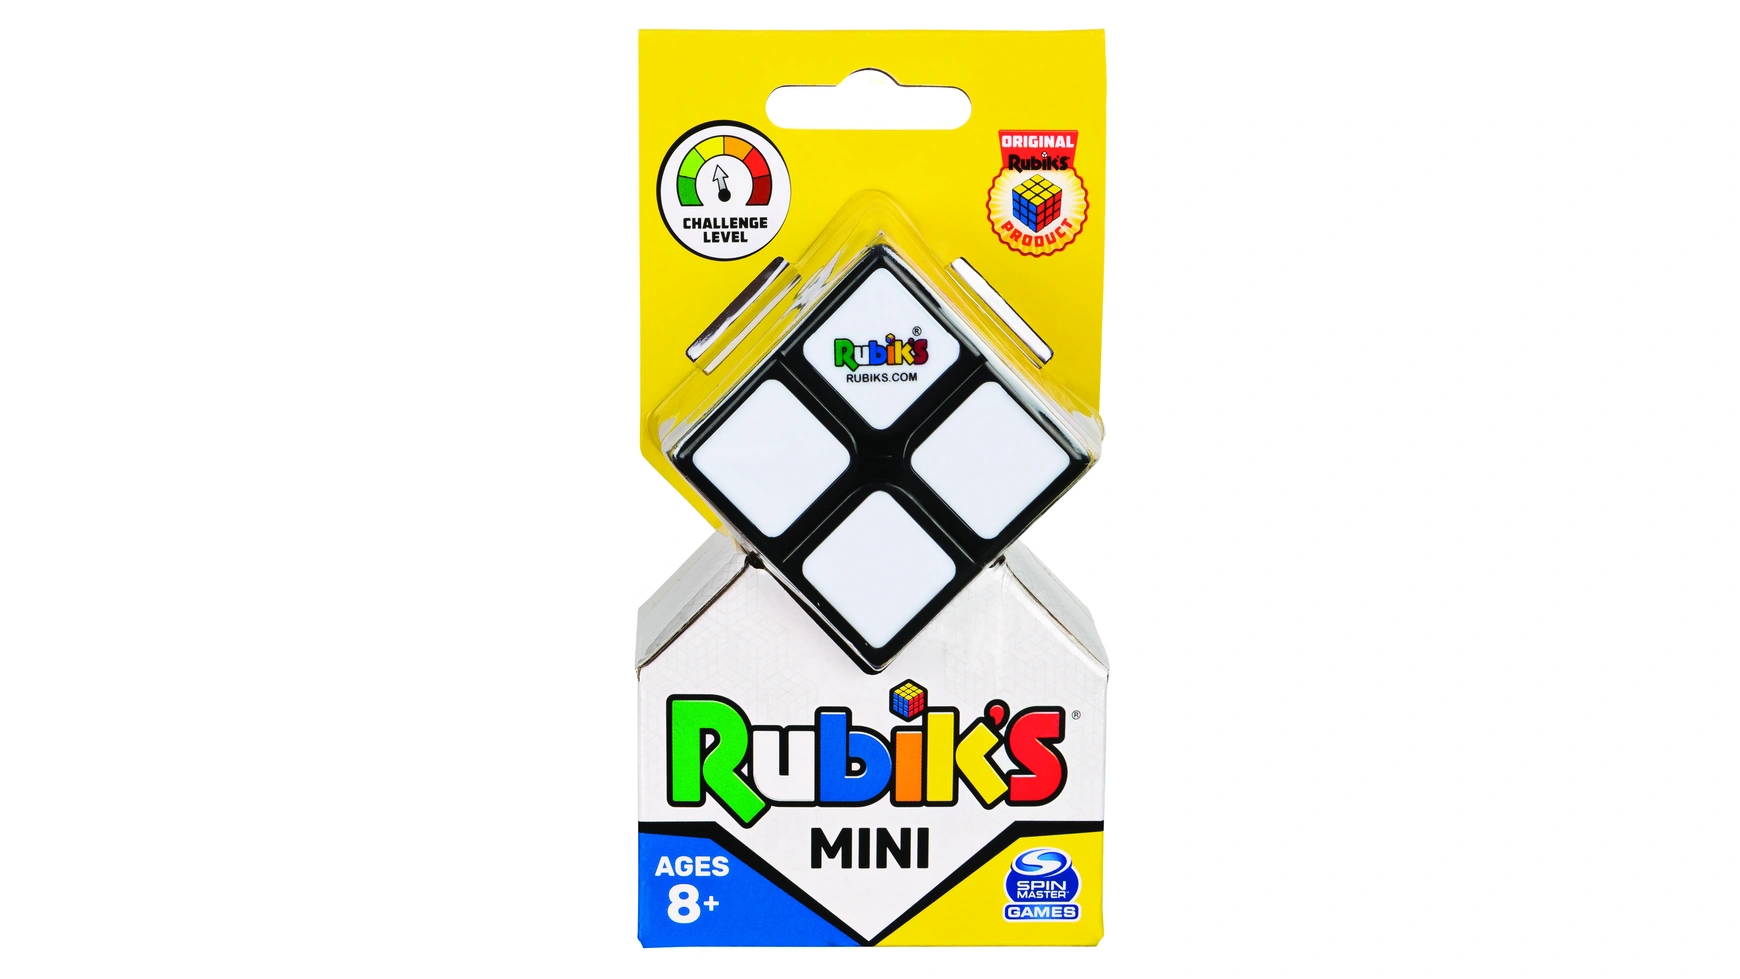 Rubik's Mini 2x2 Кубик Рубика кубик 2x2 для начинающих от 8 лет и для путешествий Spin Master кубик рубика shengshou 16x16 pillowed color